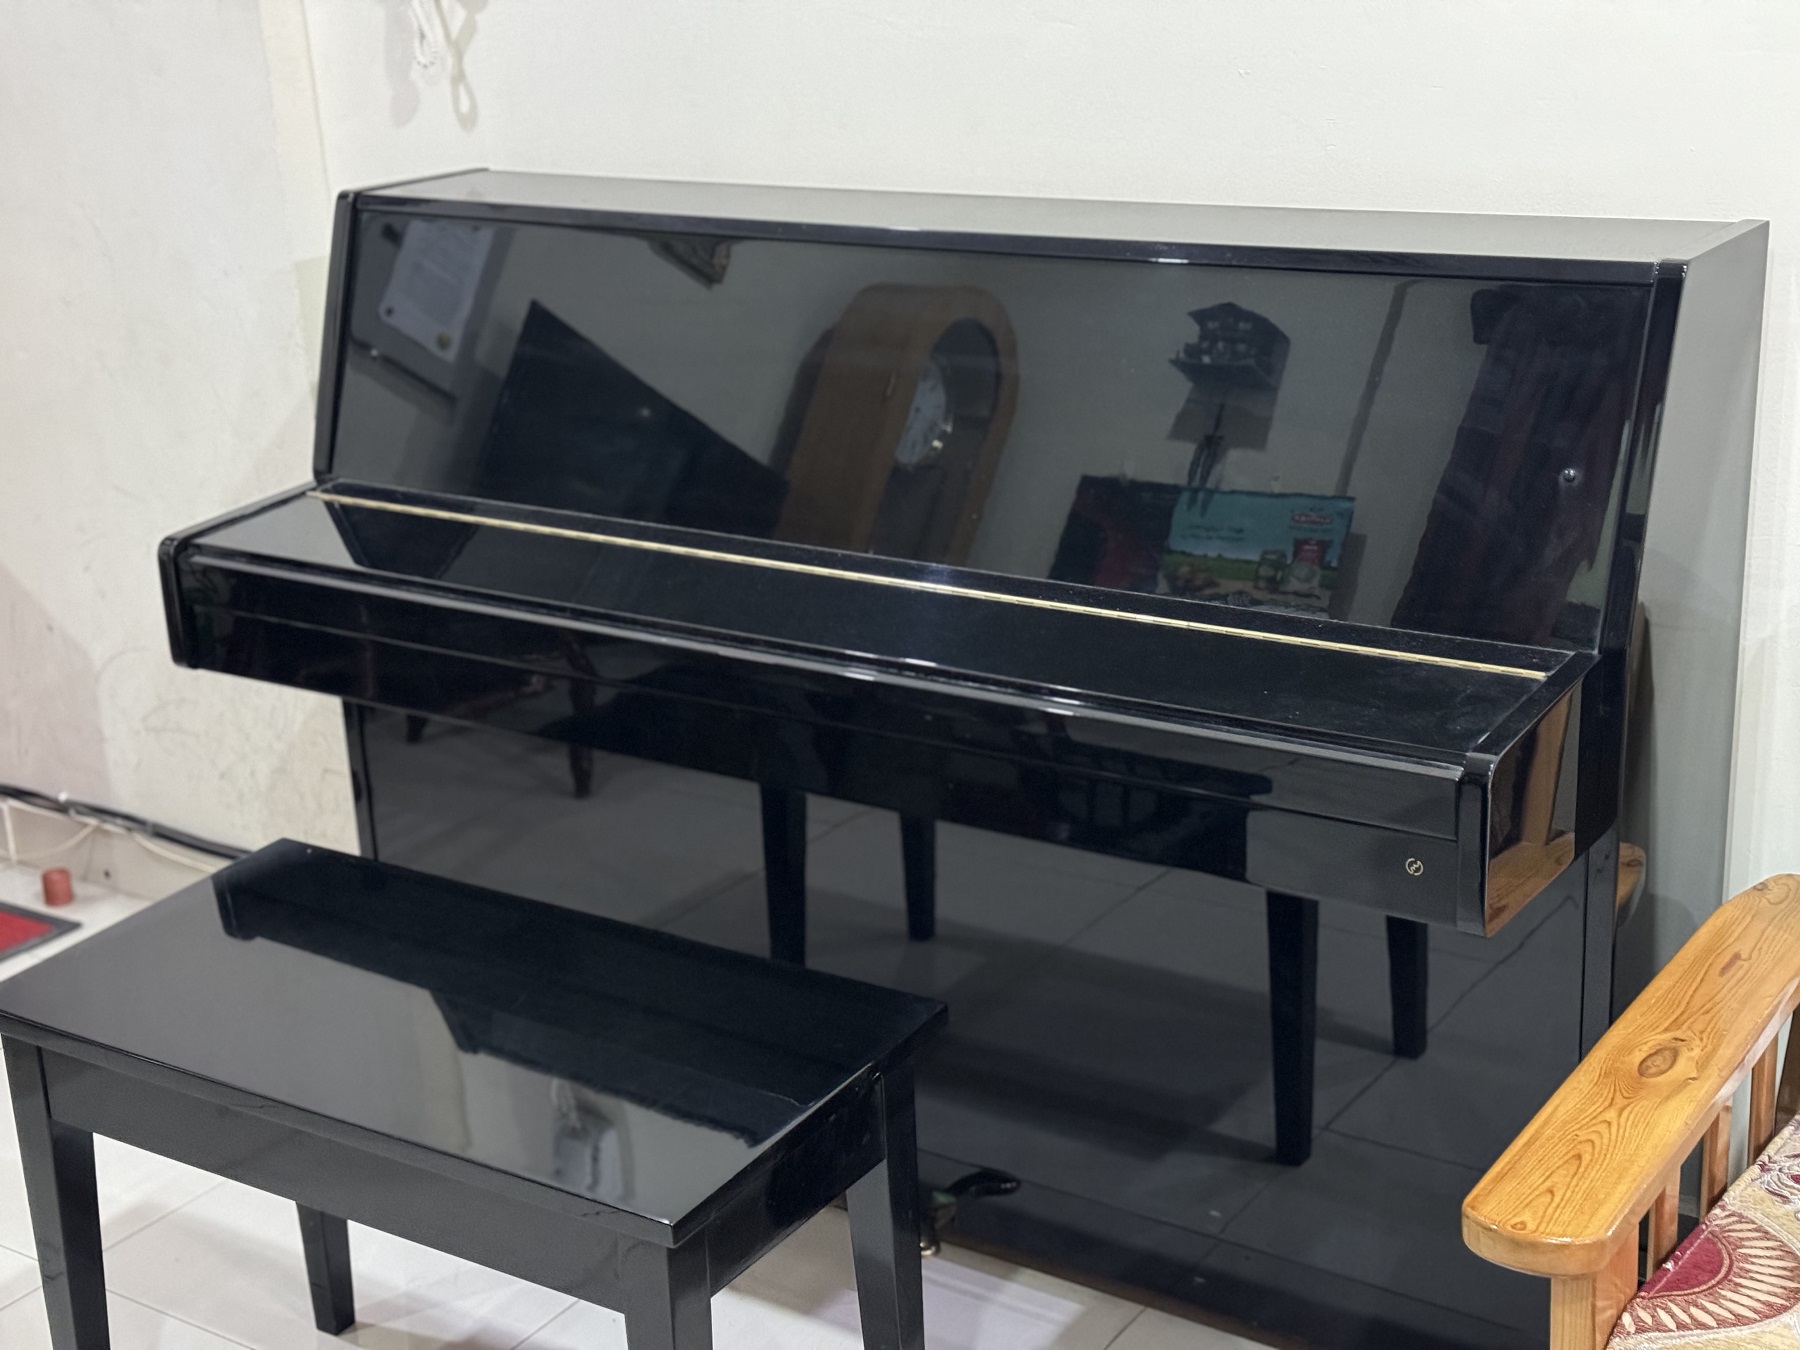 Grand Piano Kawai on immediate sale